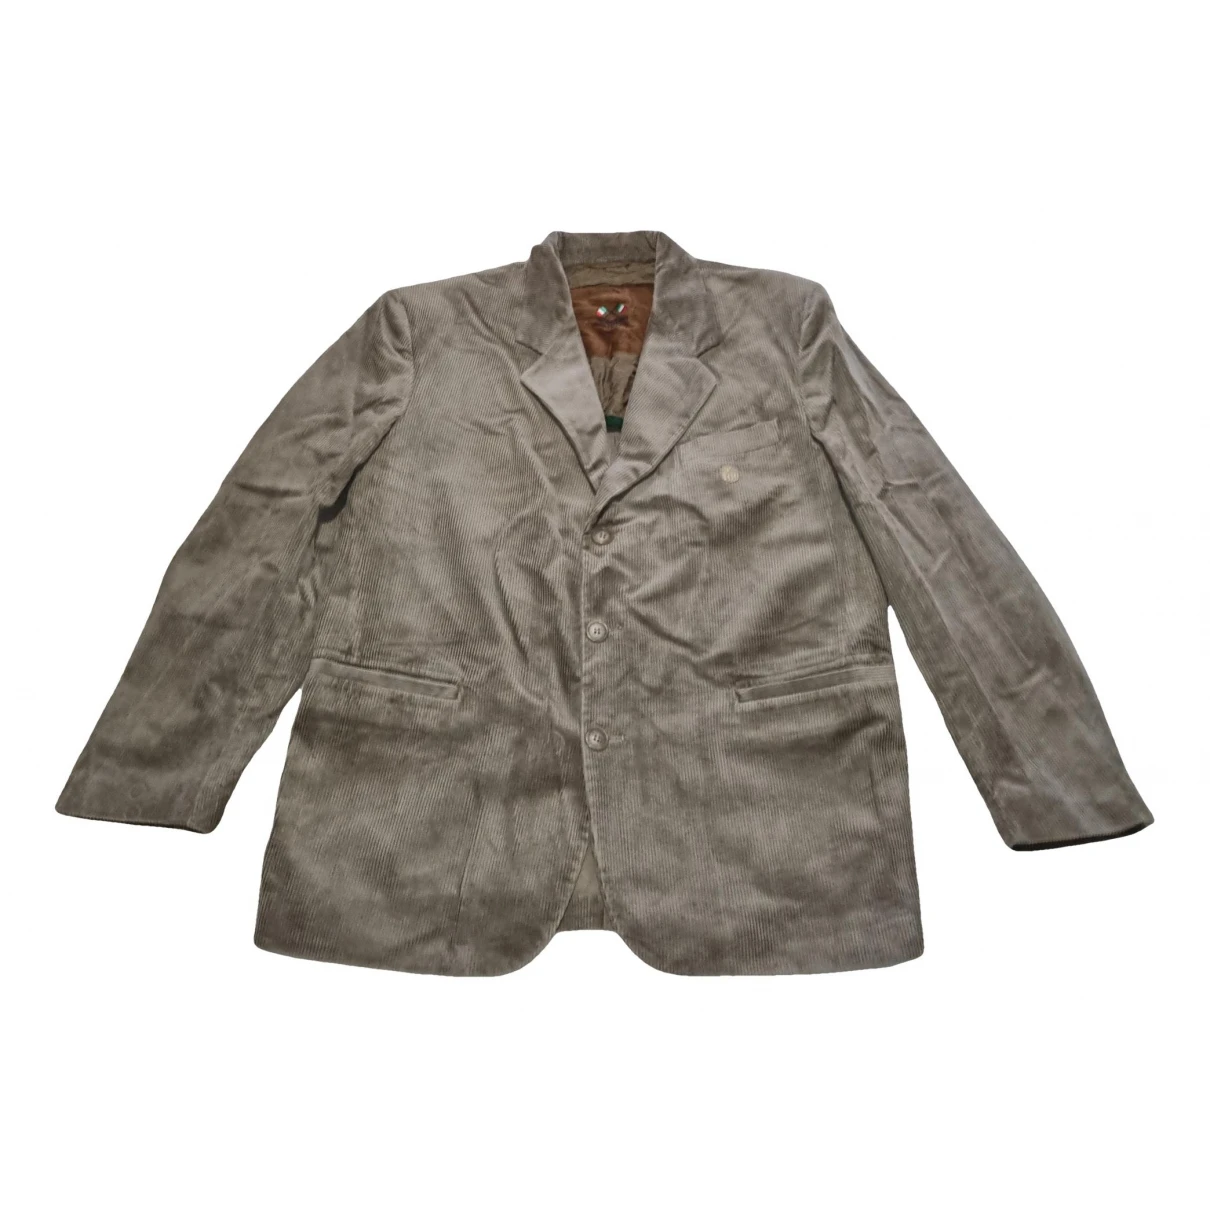 clothing Valentino Garavani jackets for Male Velvet 50 IT. Used condition